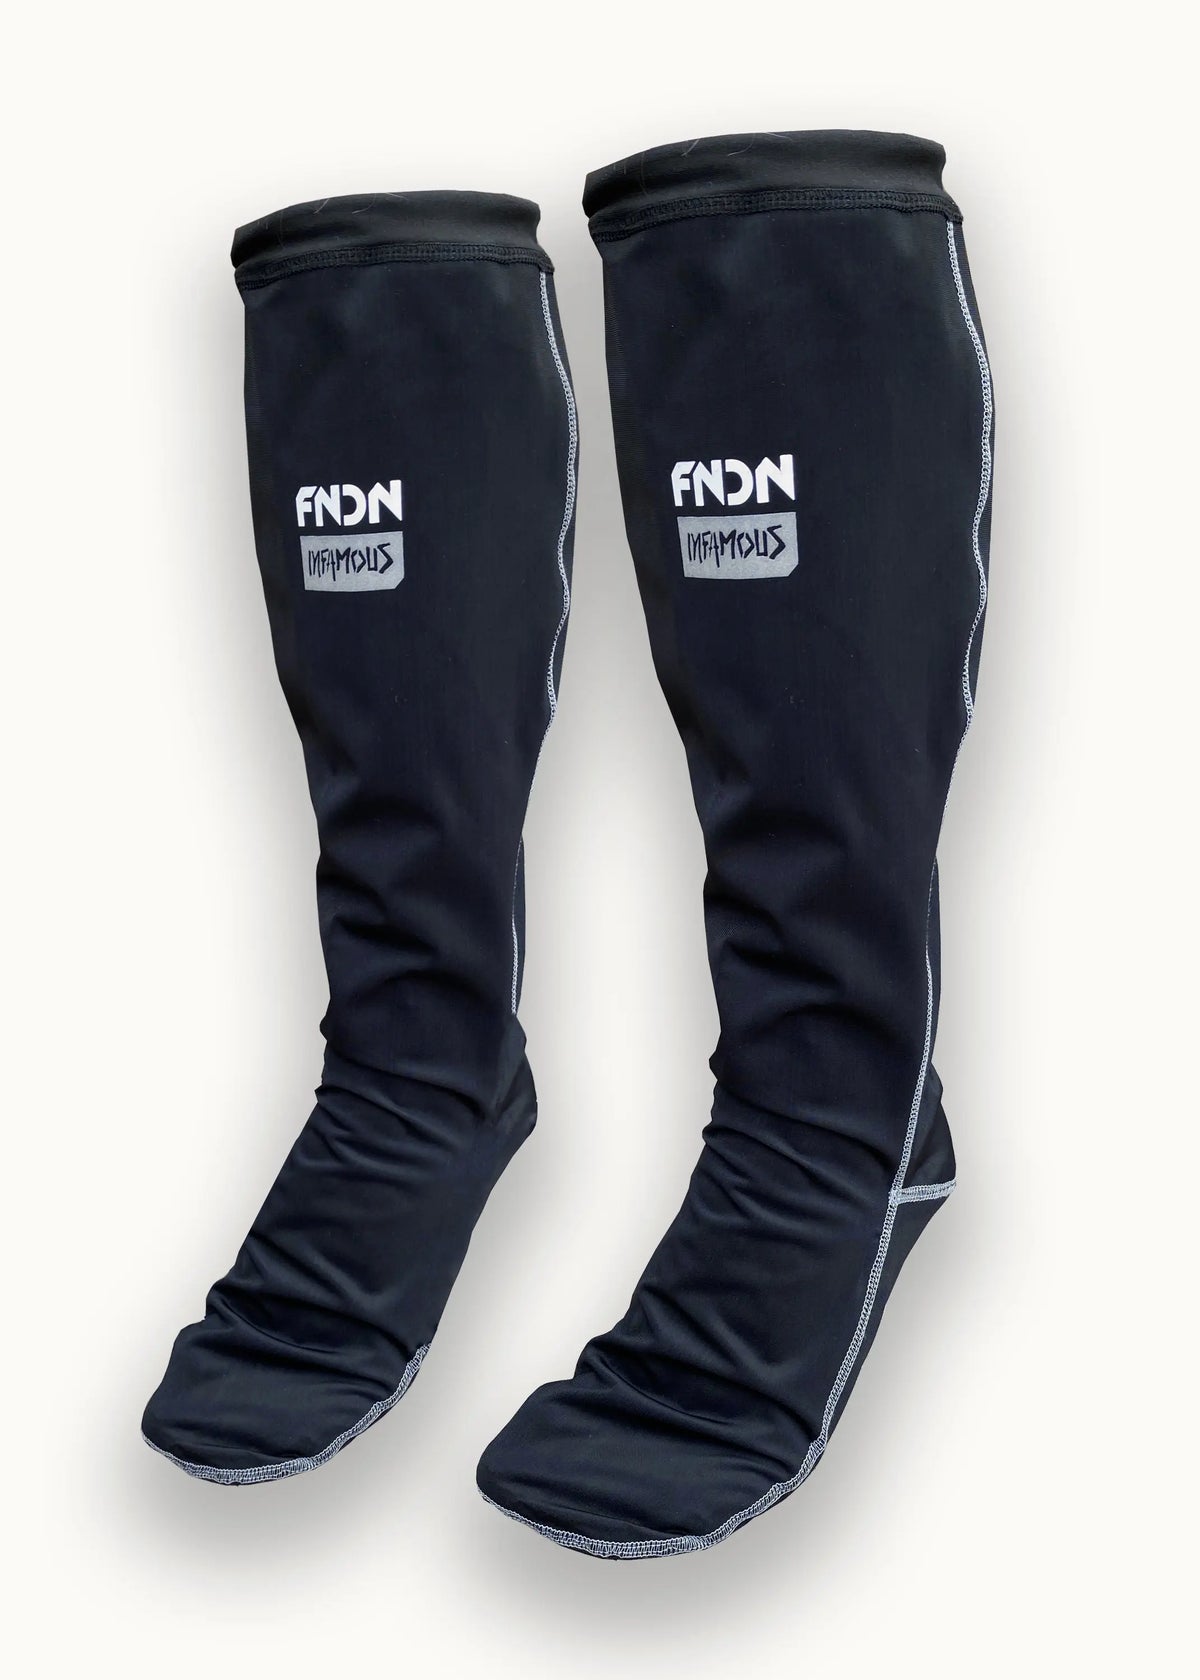 FNDN Infamous Waterproof Socks AKA “Portable Rain Boots”